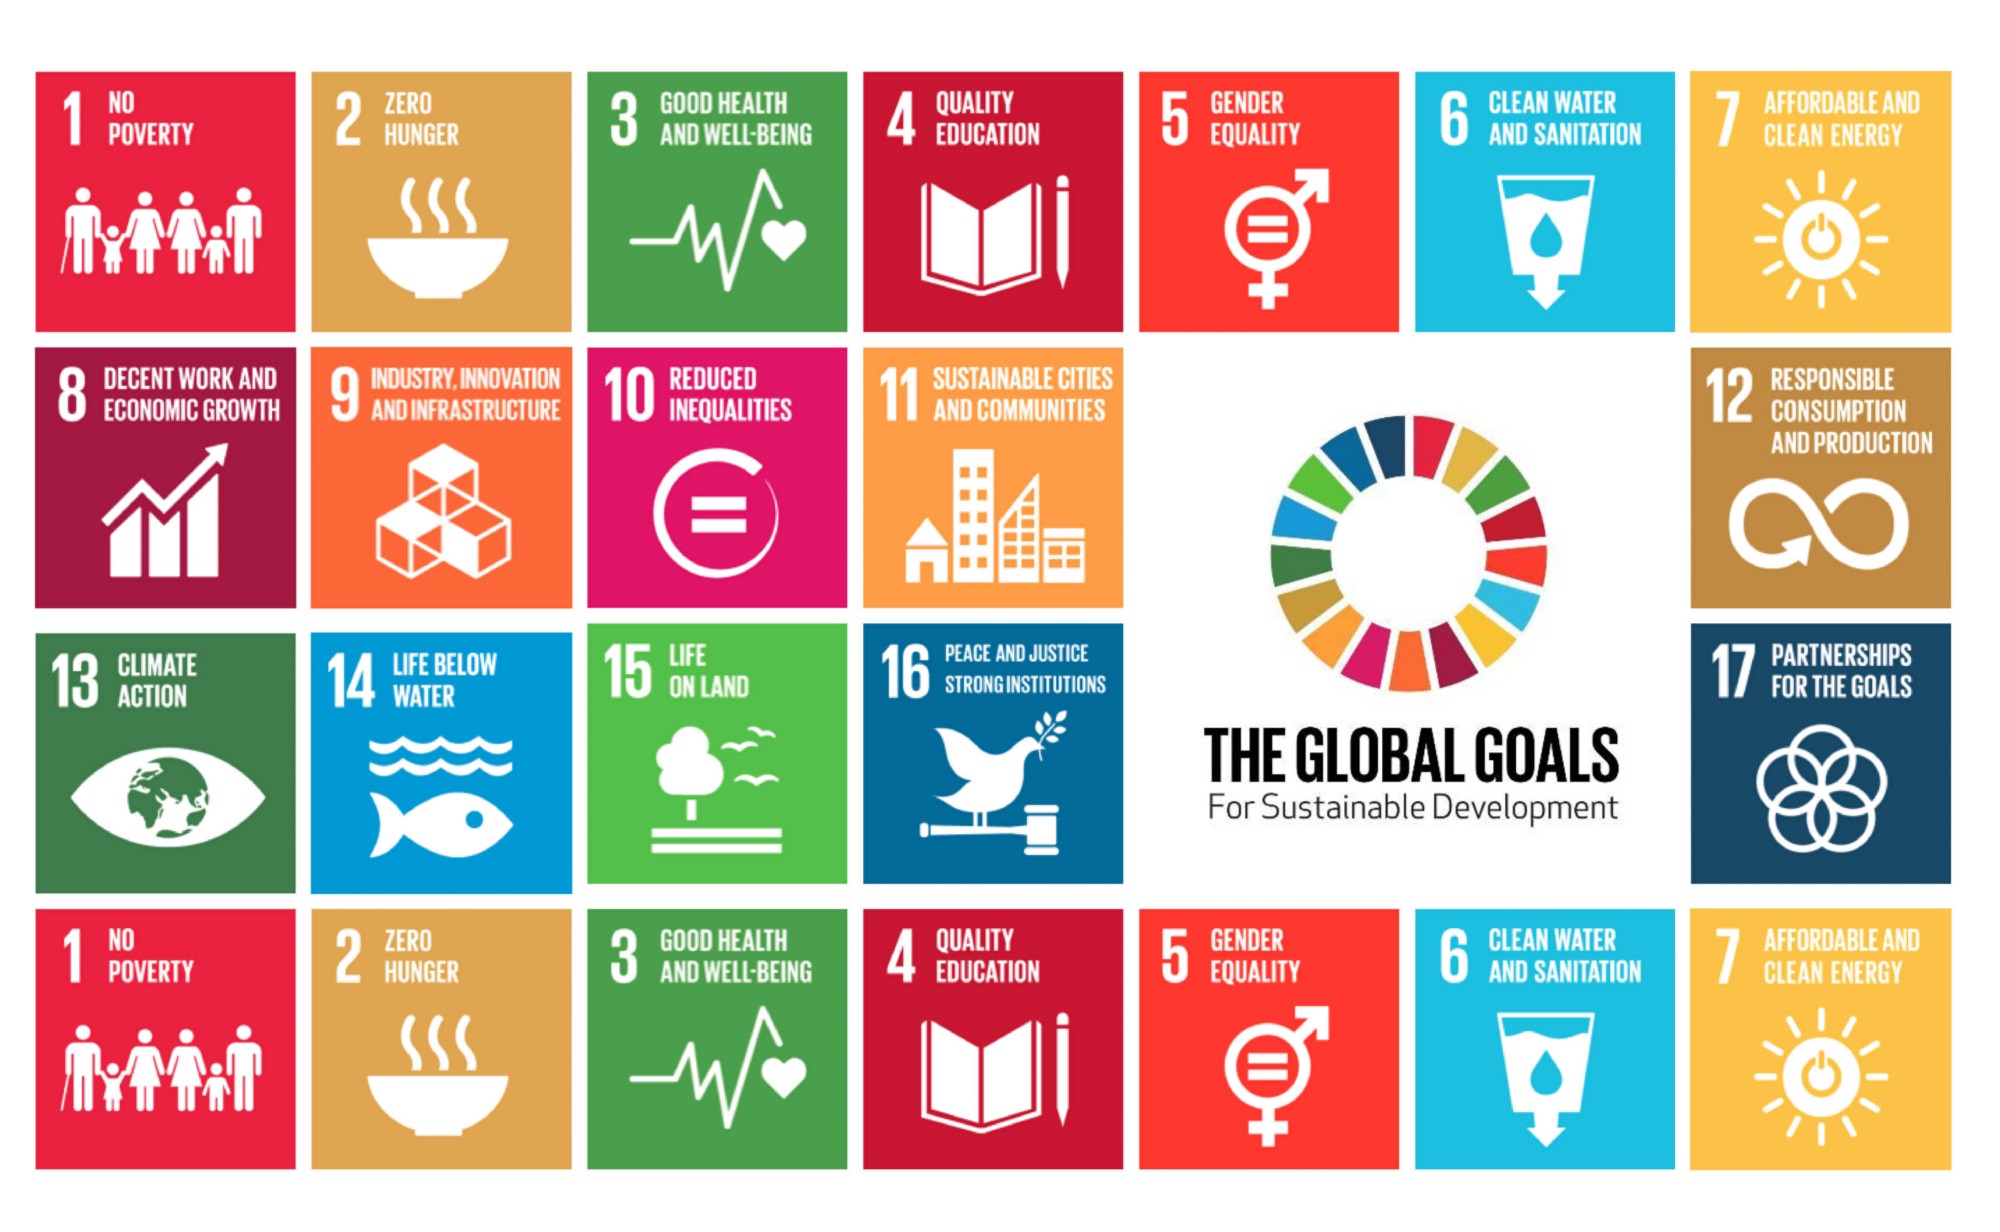 Sustainability Development Goals